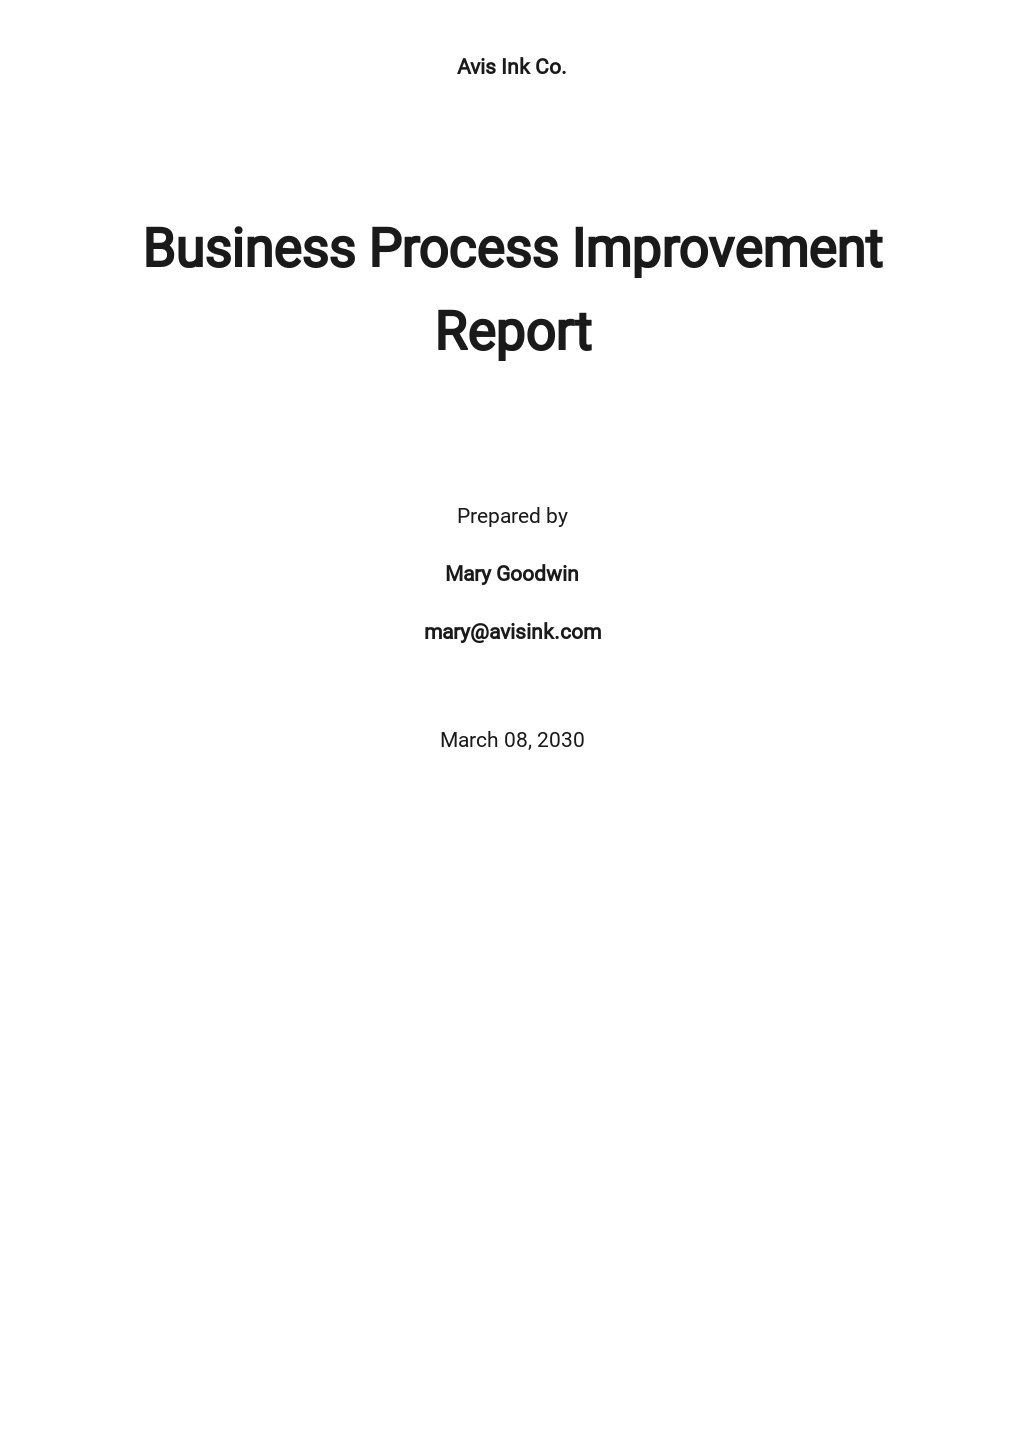 Improvement Report Template